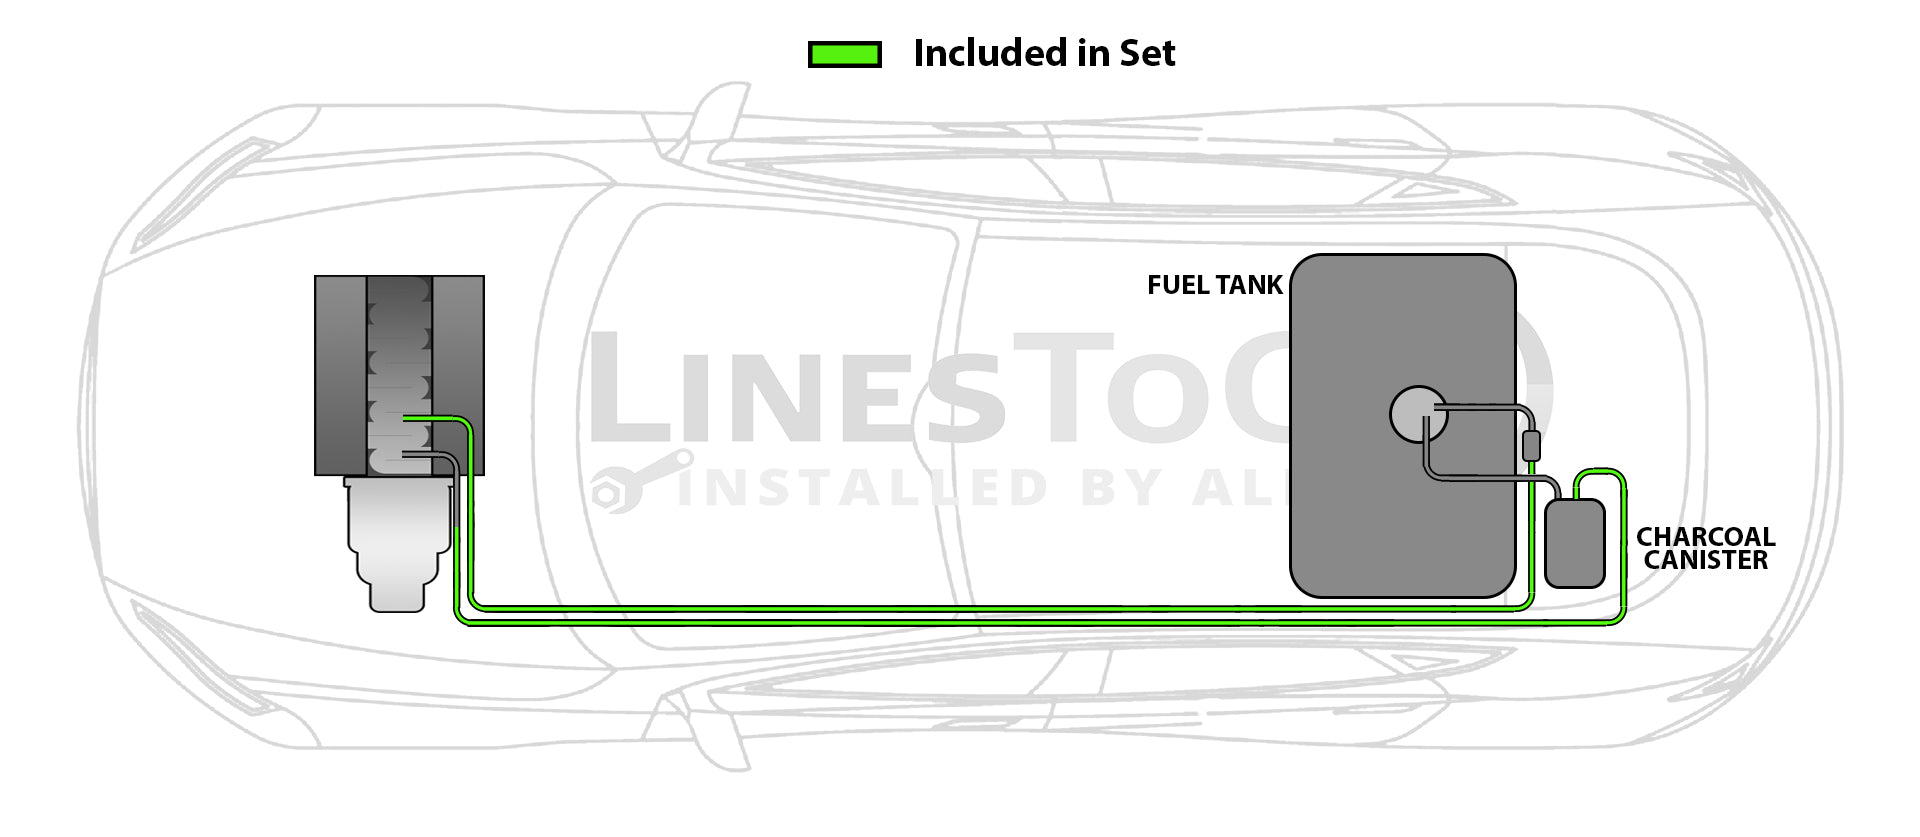 Pontiac G5 Fuel Line Set 2009 2.4L FL255-A3K